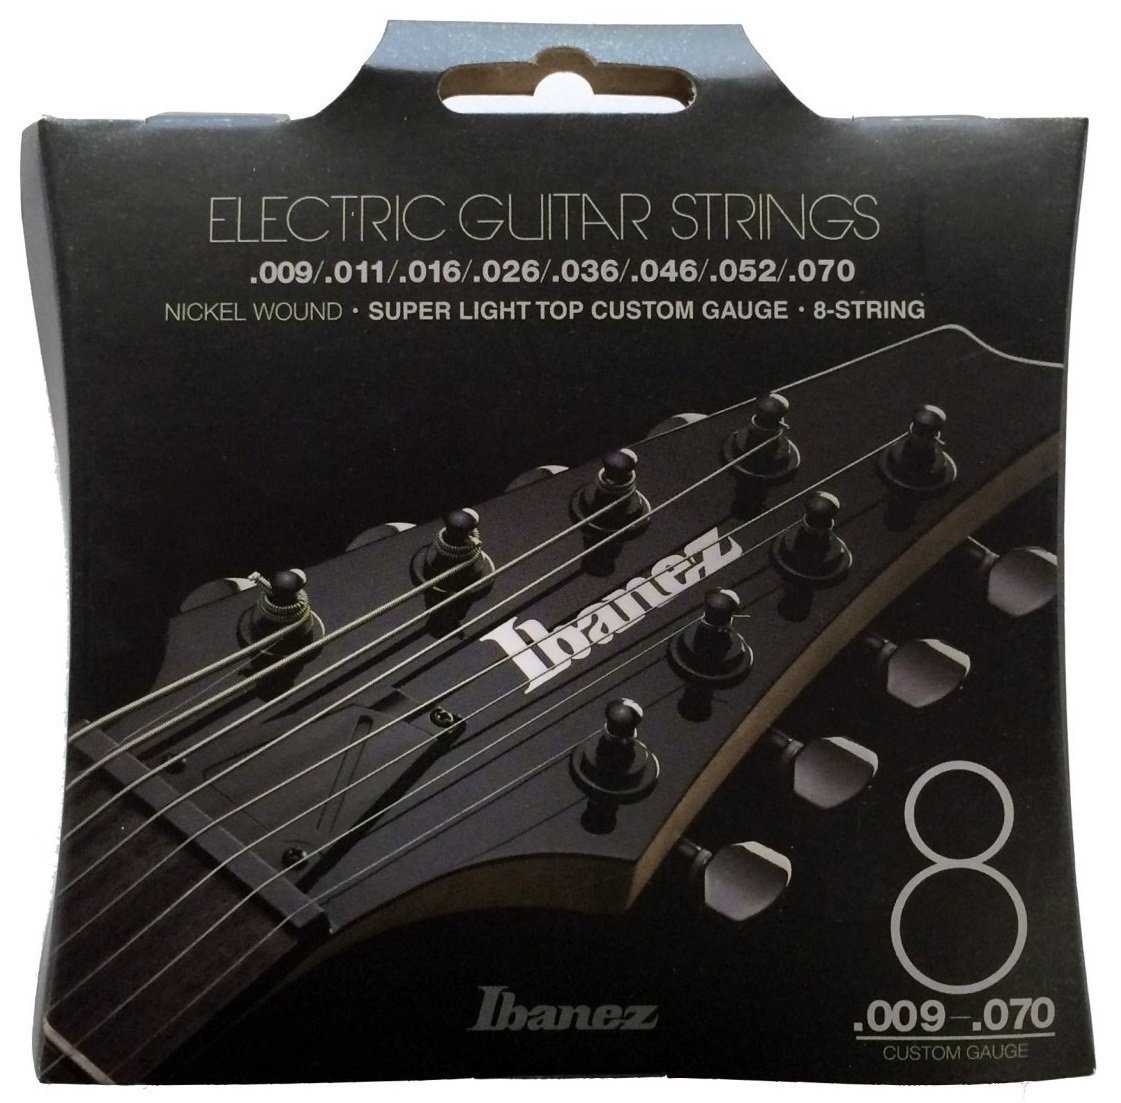 E-guitar strings Ibanez IEGS82